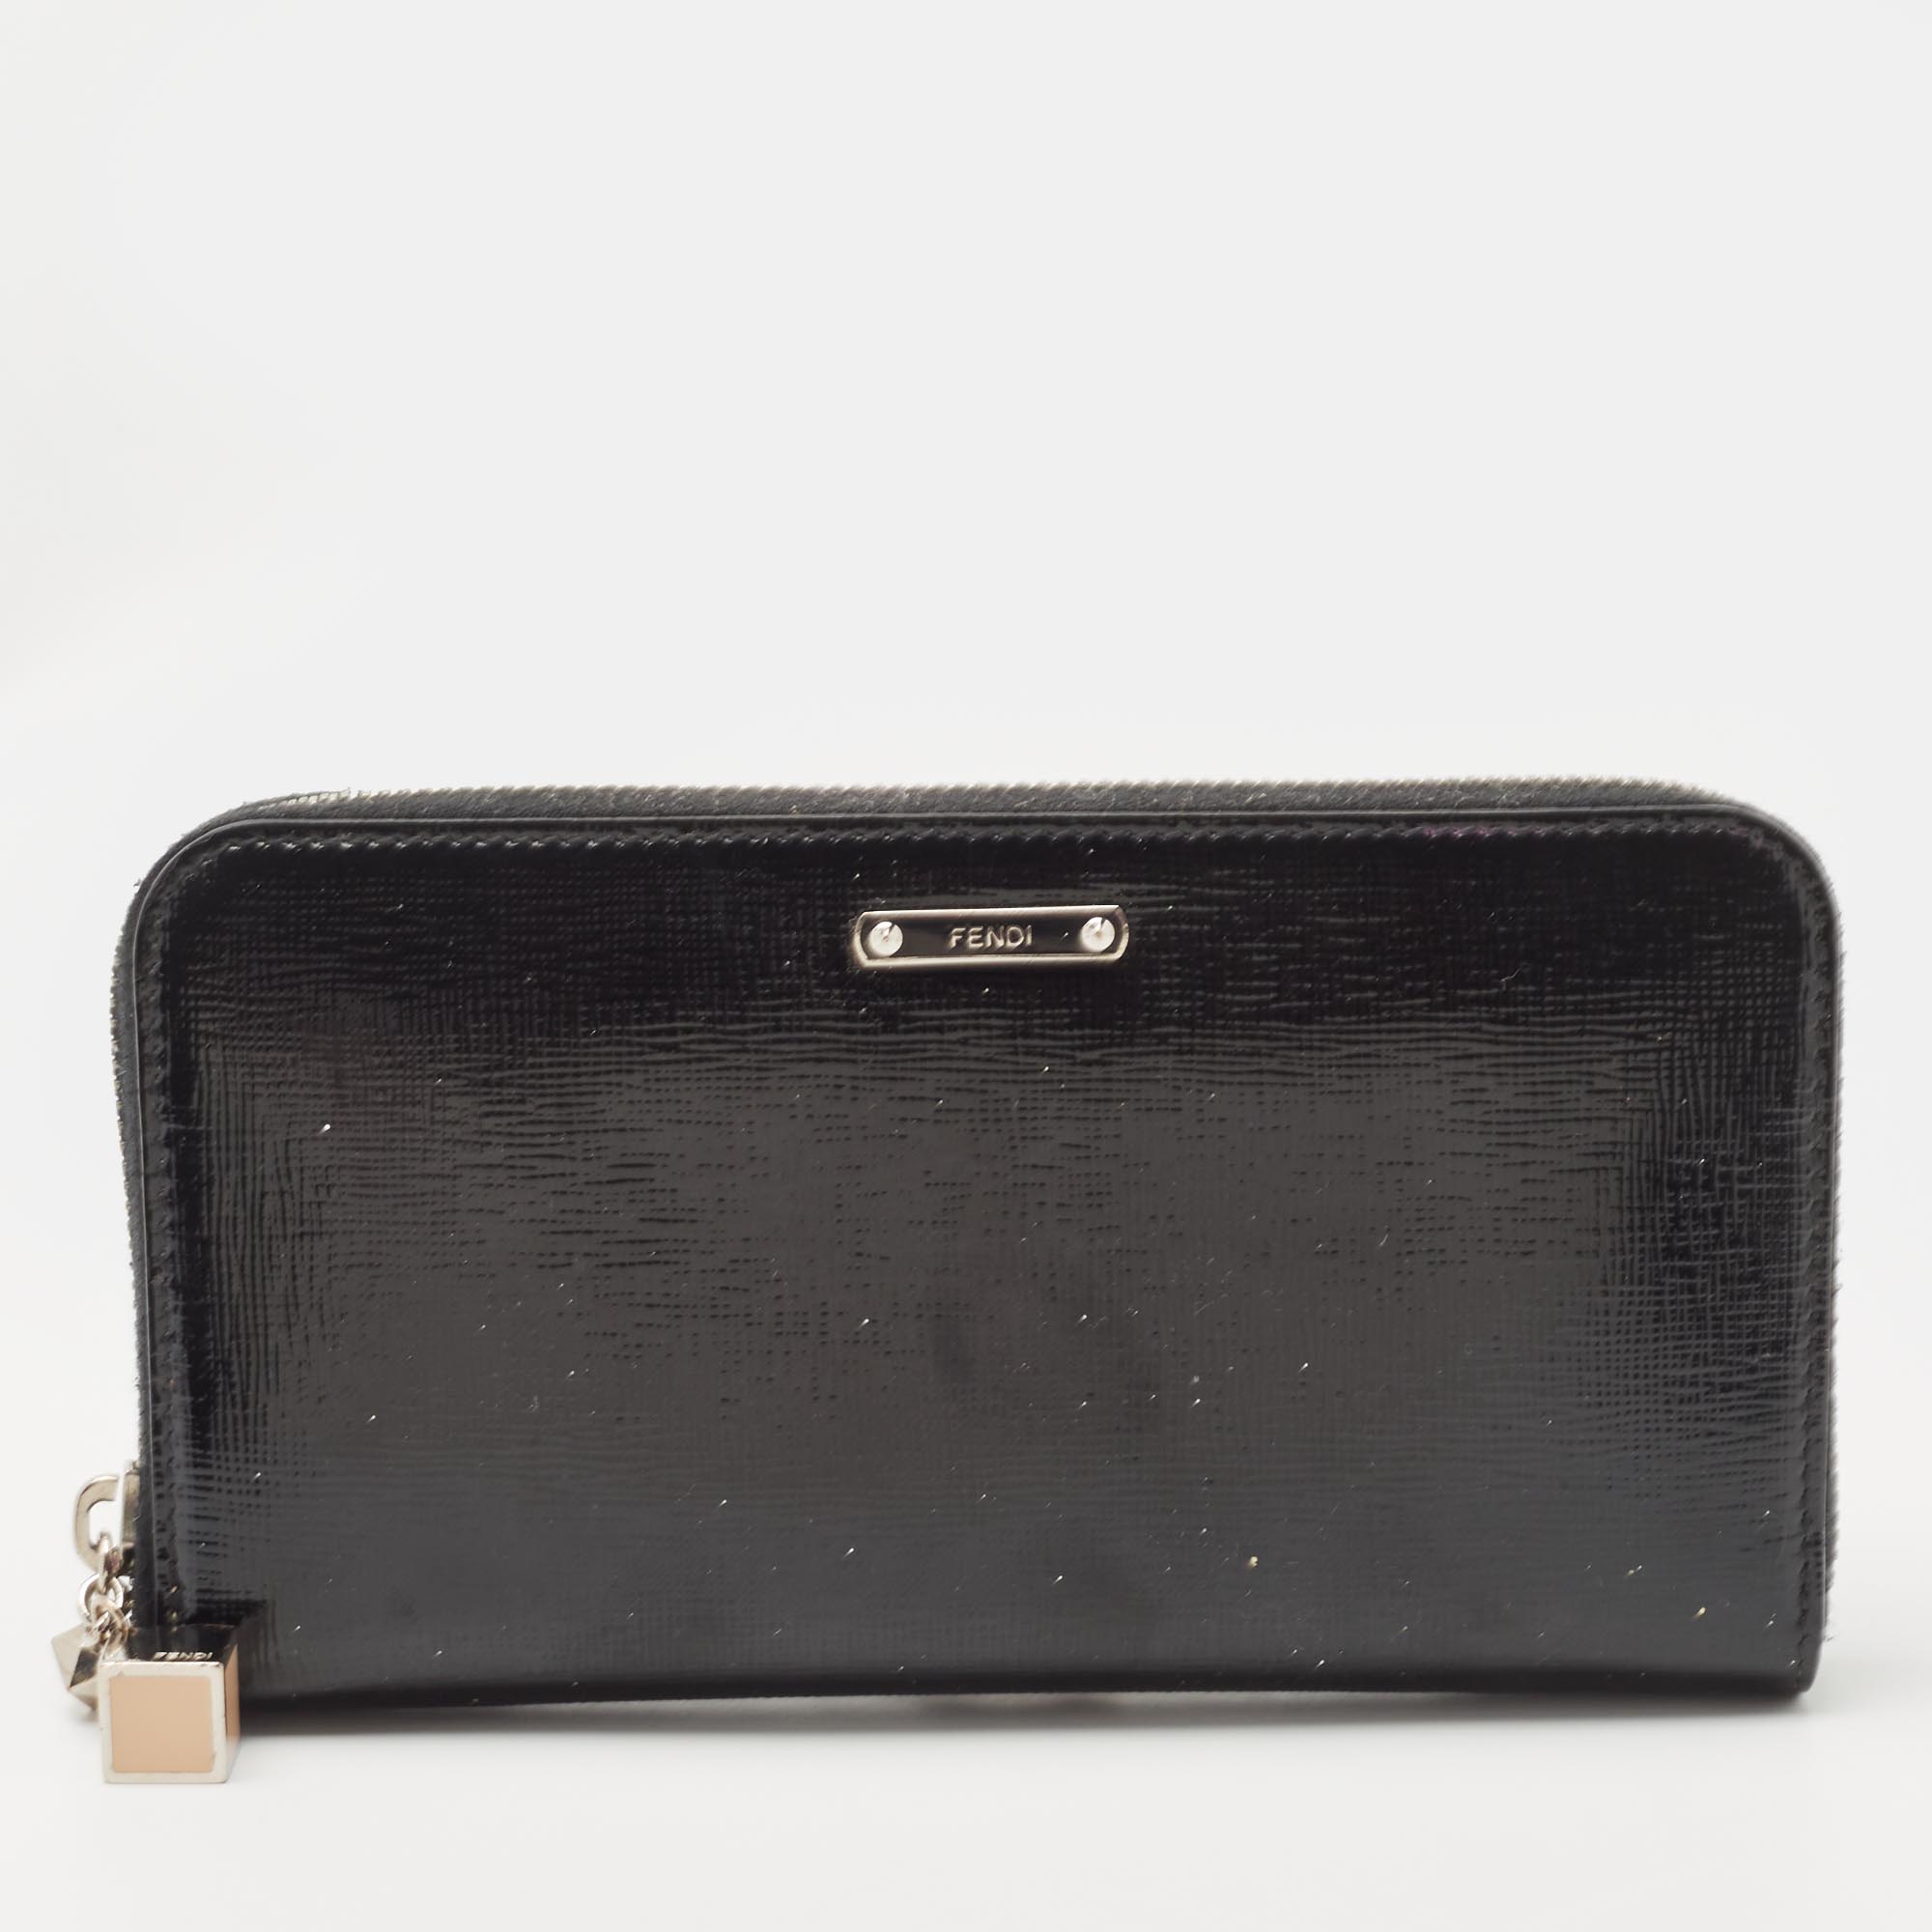 

Fendi Black Patent Leather Zip Around Wallet